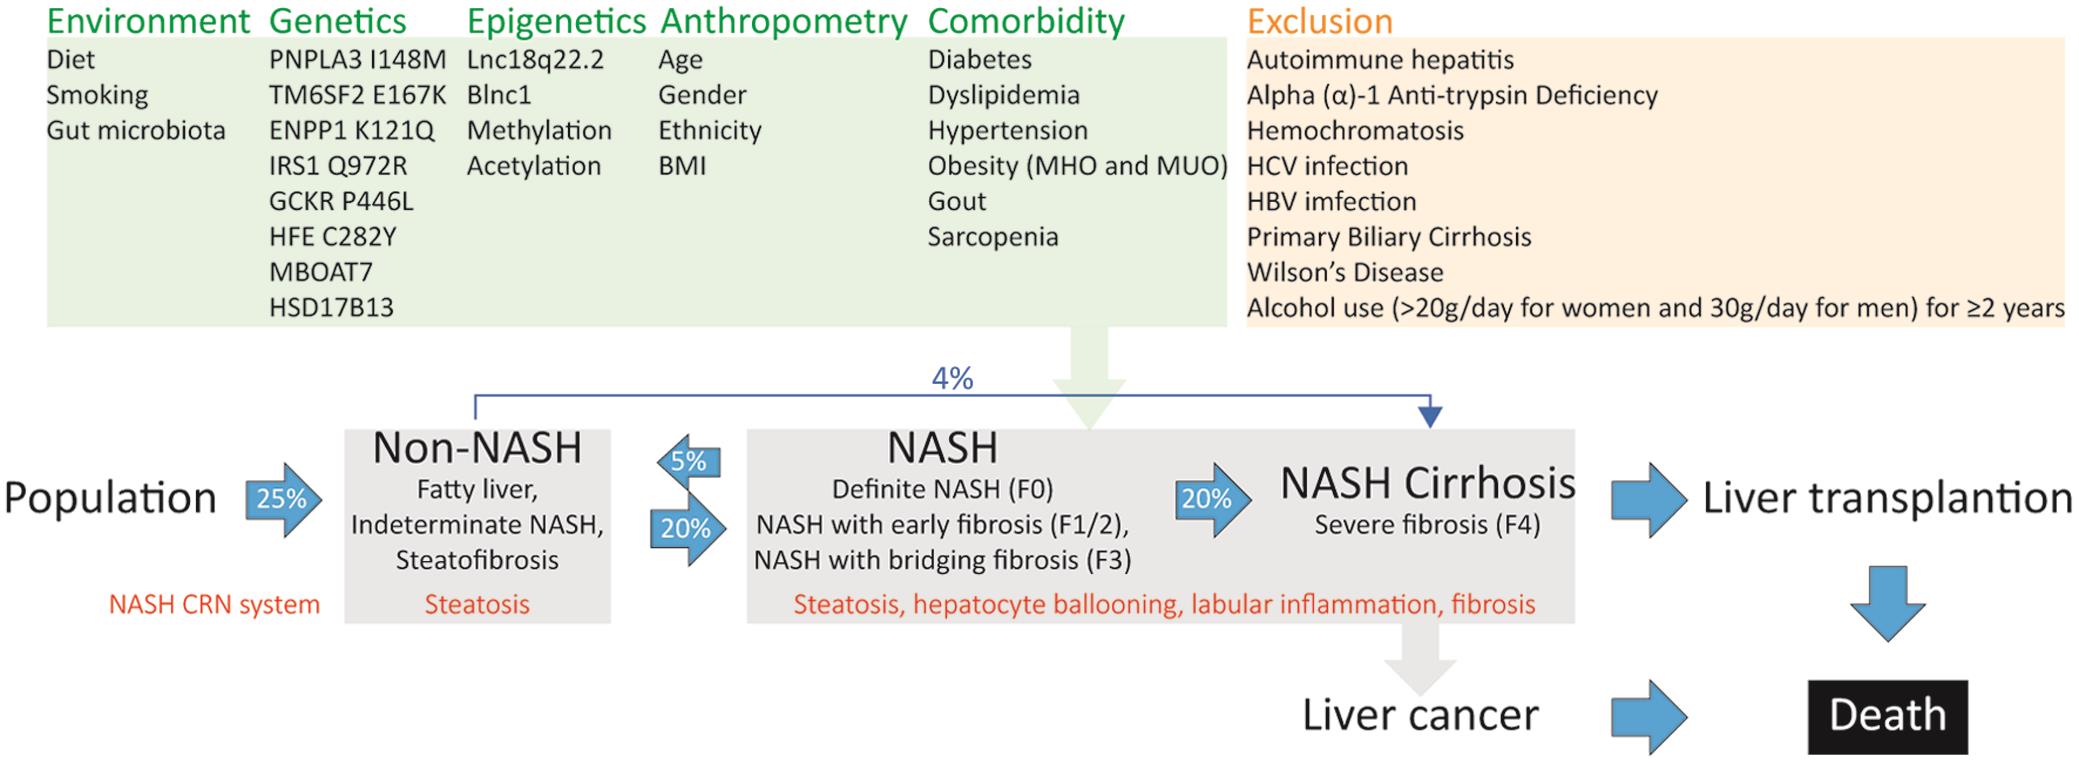 Heterogeneity of nonalcoholic fatty liver disease.